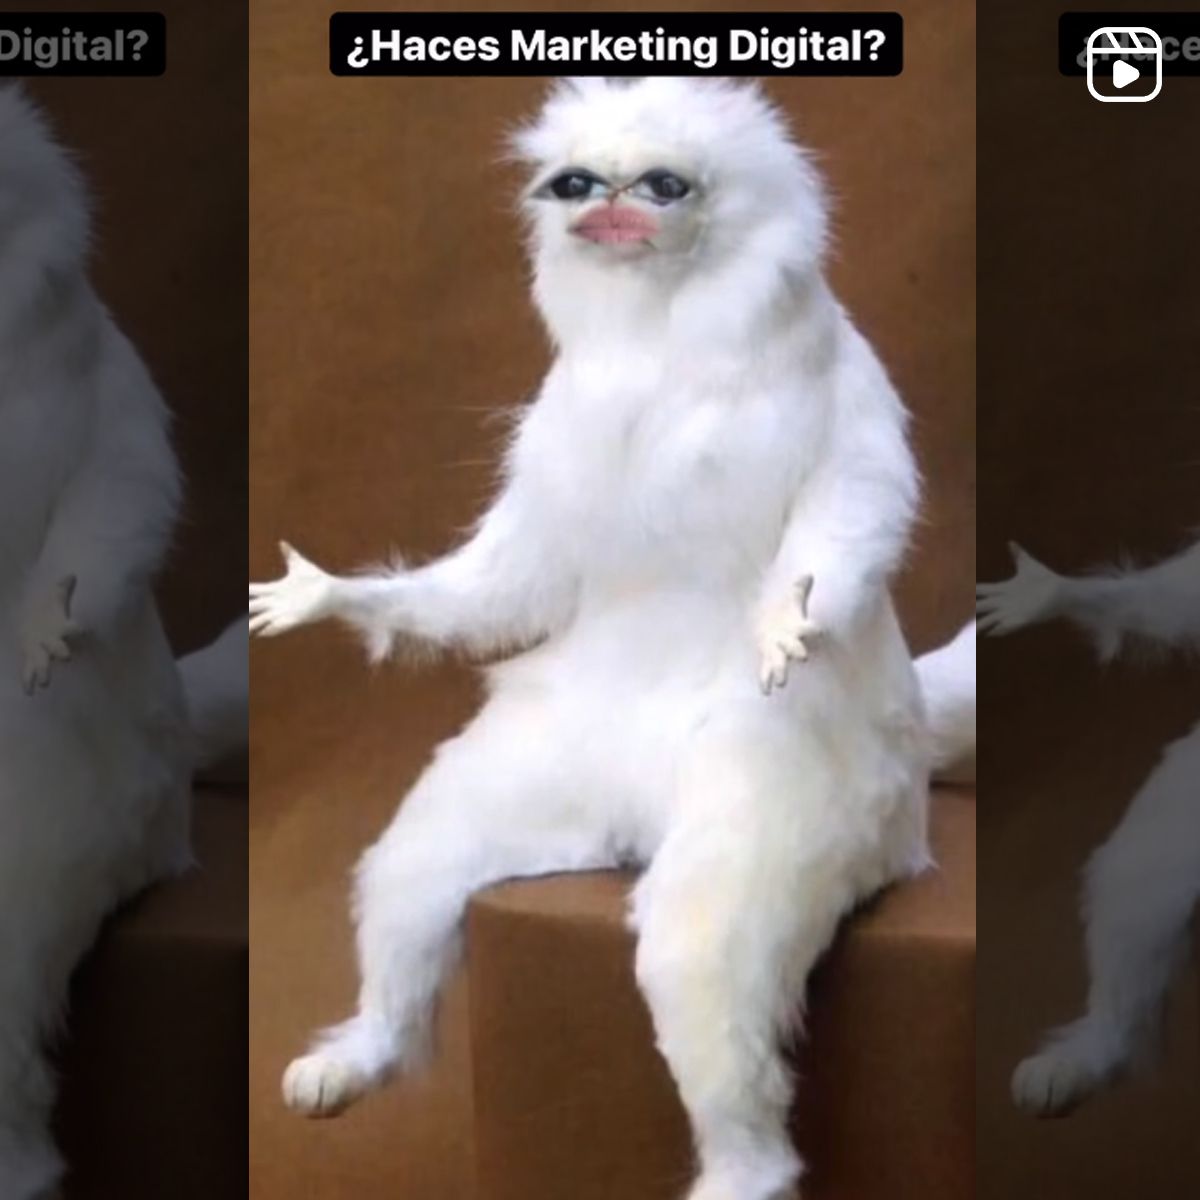 ¿Haces Marketing Digital?